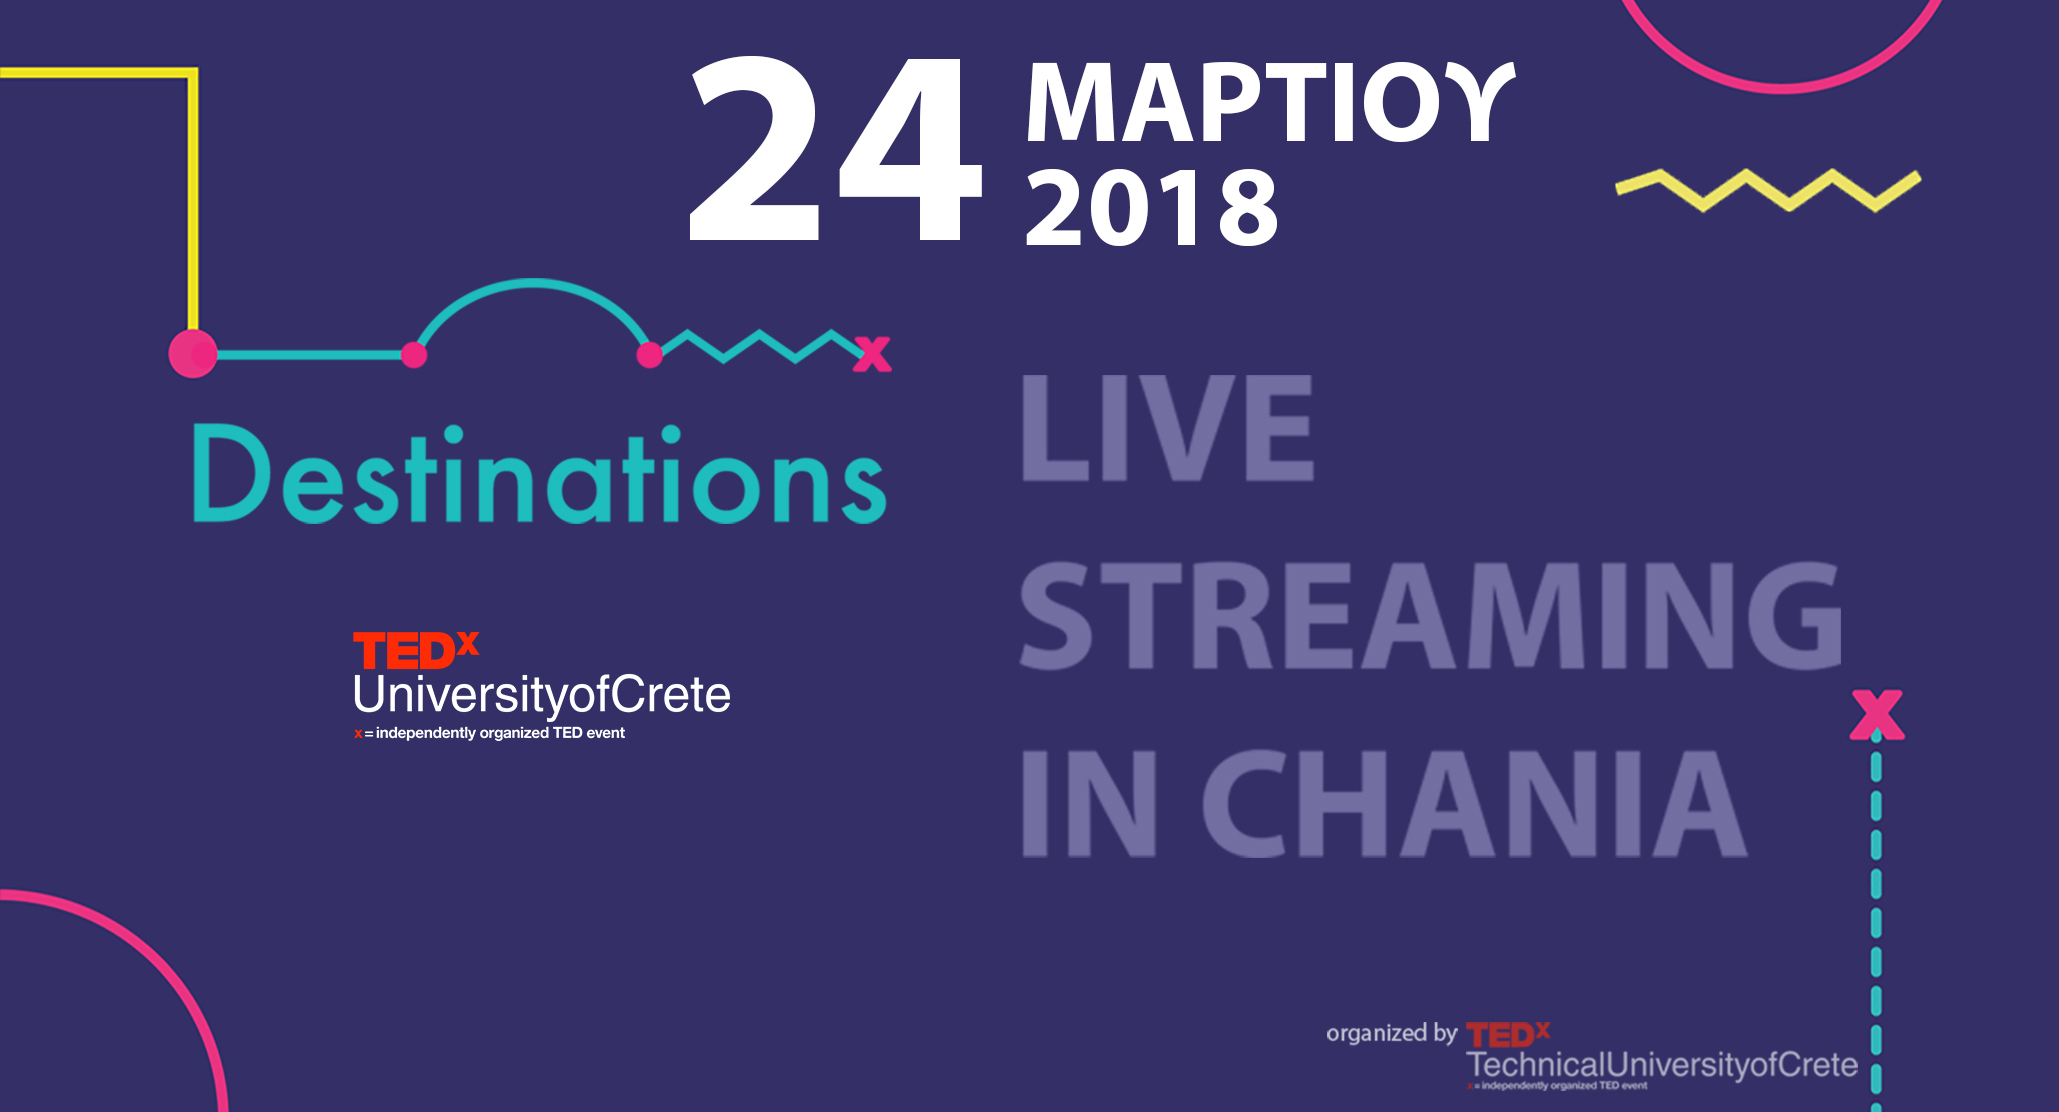 Tο TEDx University of Crete με live streaming από το ΚΑΜ στα Χανιά